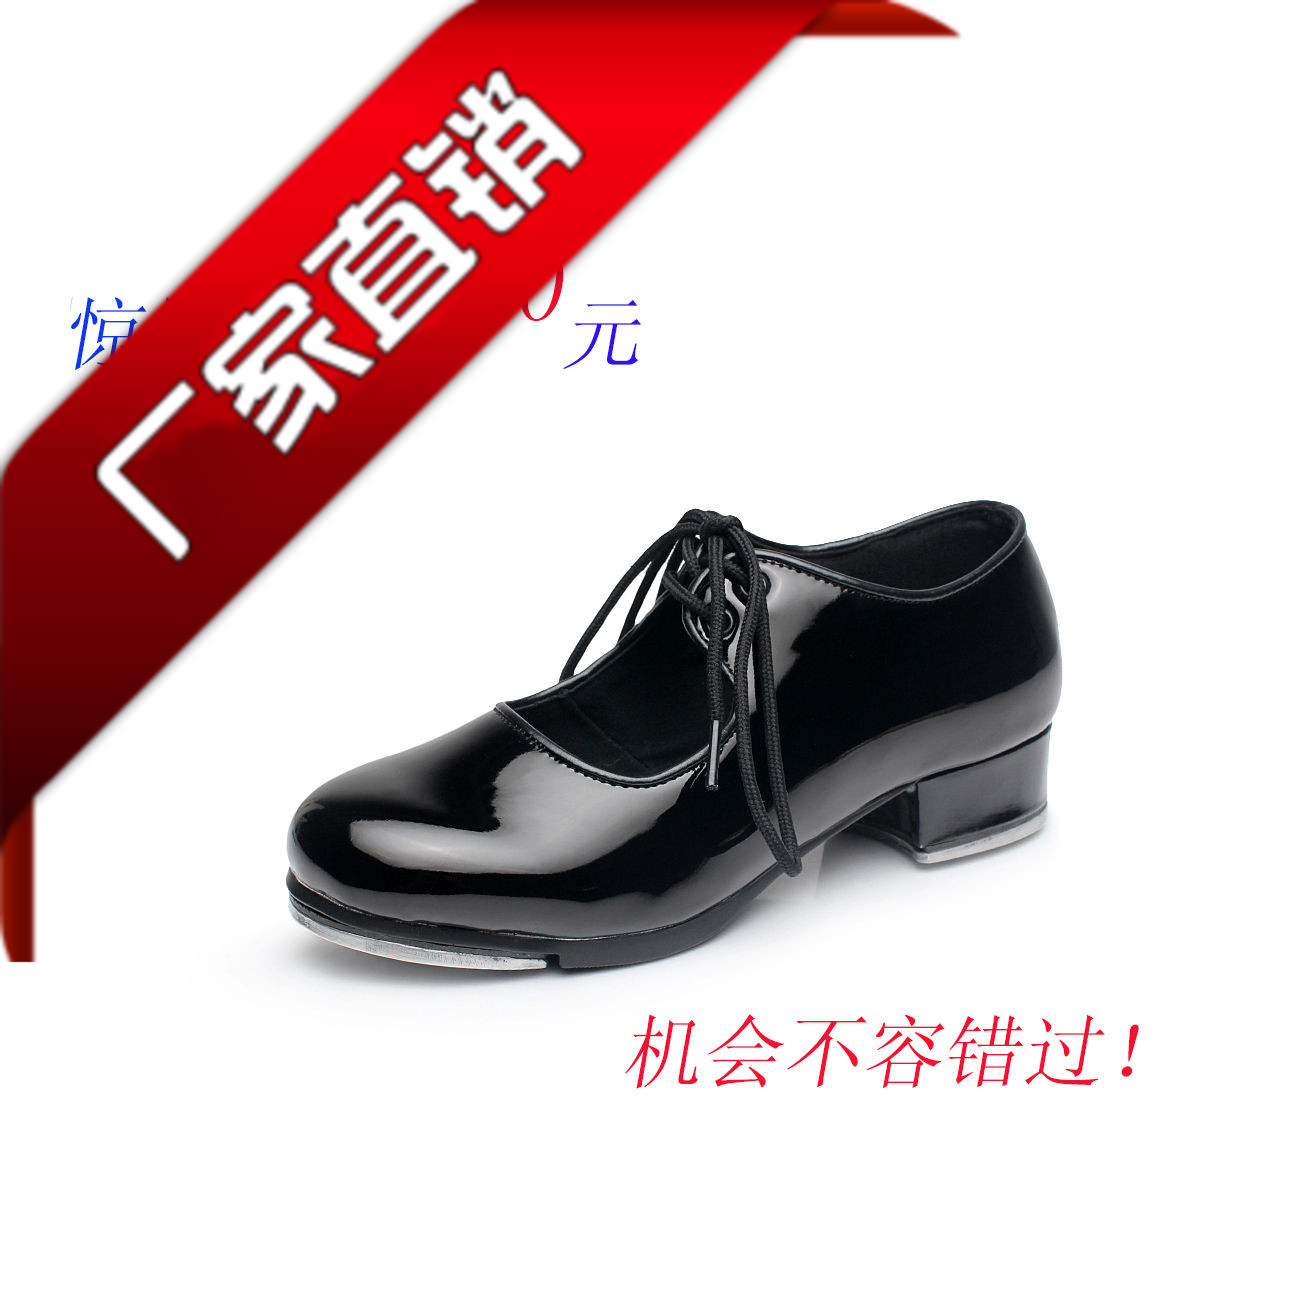 Chaussures de claquettes - Ref 3448576 Image 1